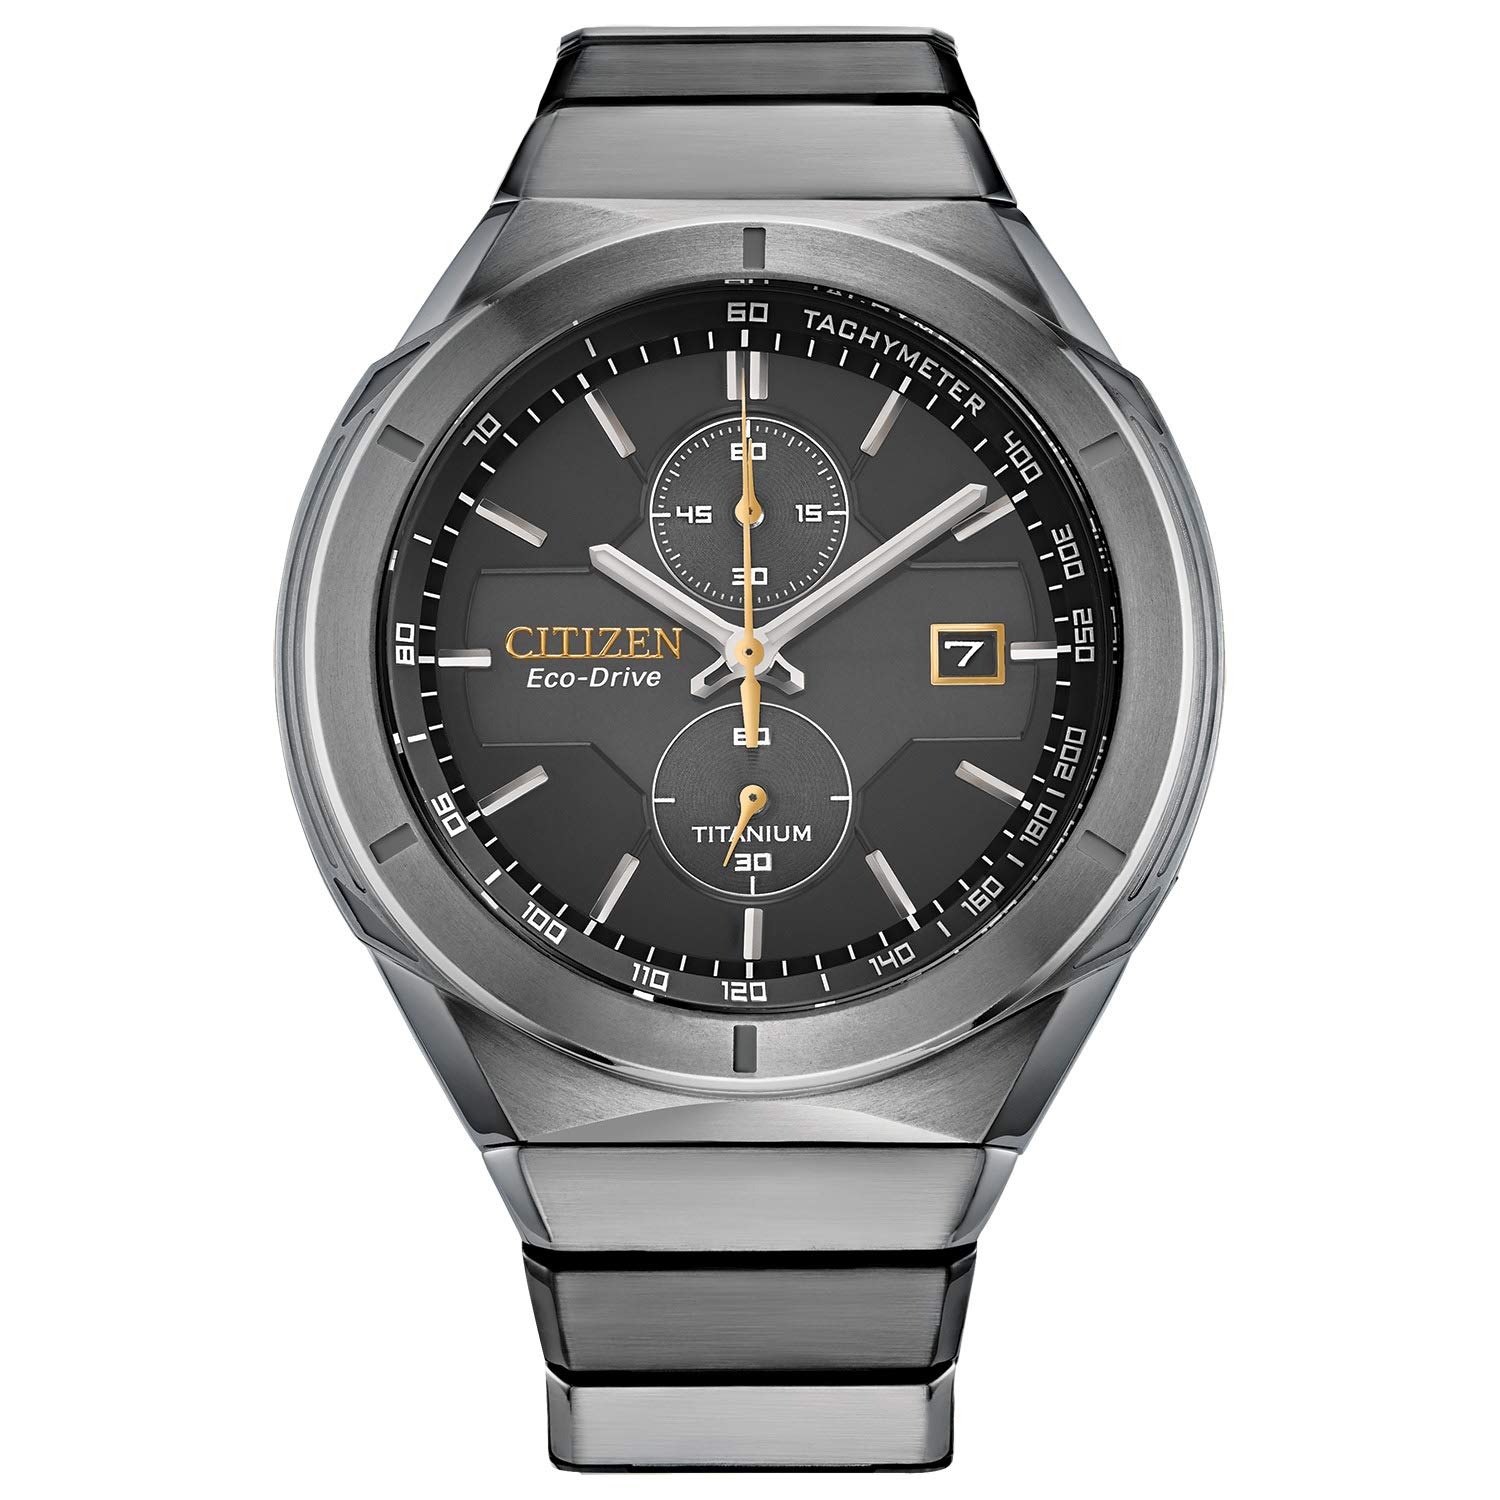 Citizen Men's Eco-Drive Sport Luxury Armor Watch in Super Titanium, Black Dial (Model: CA7058-55E)